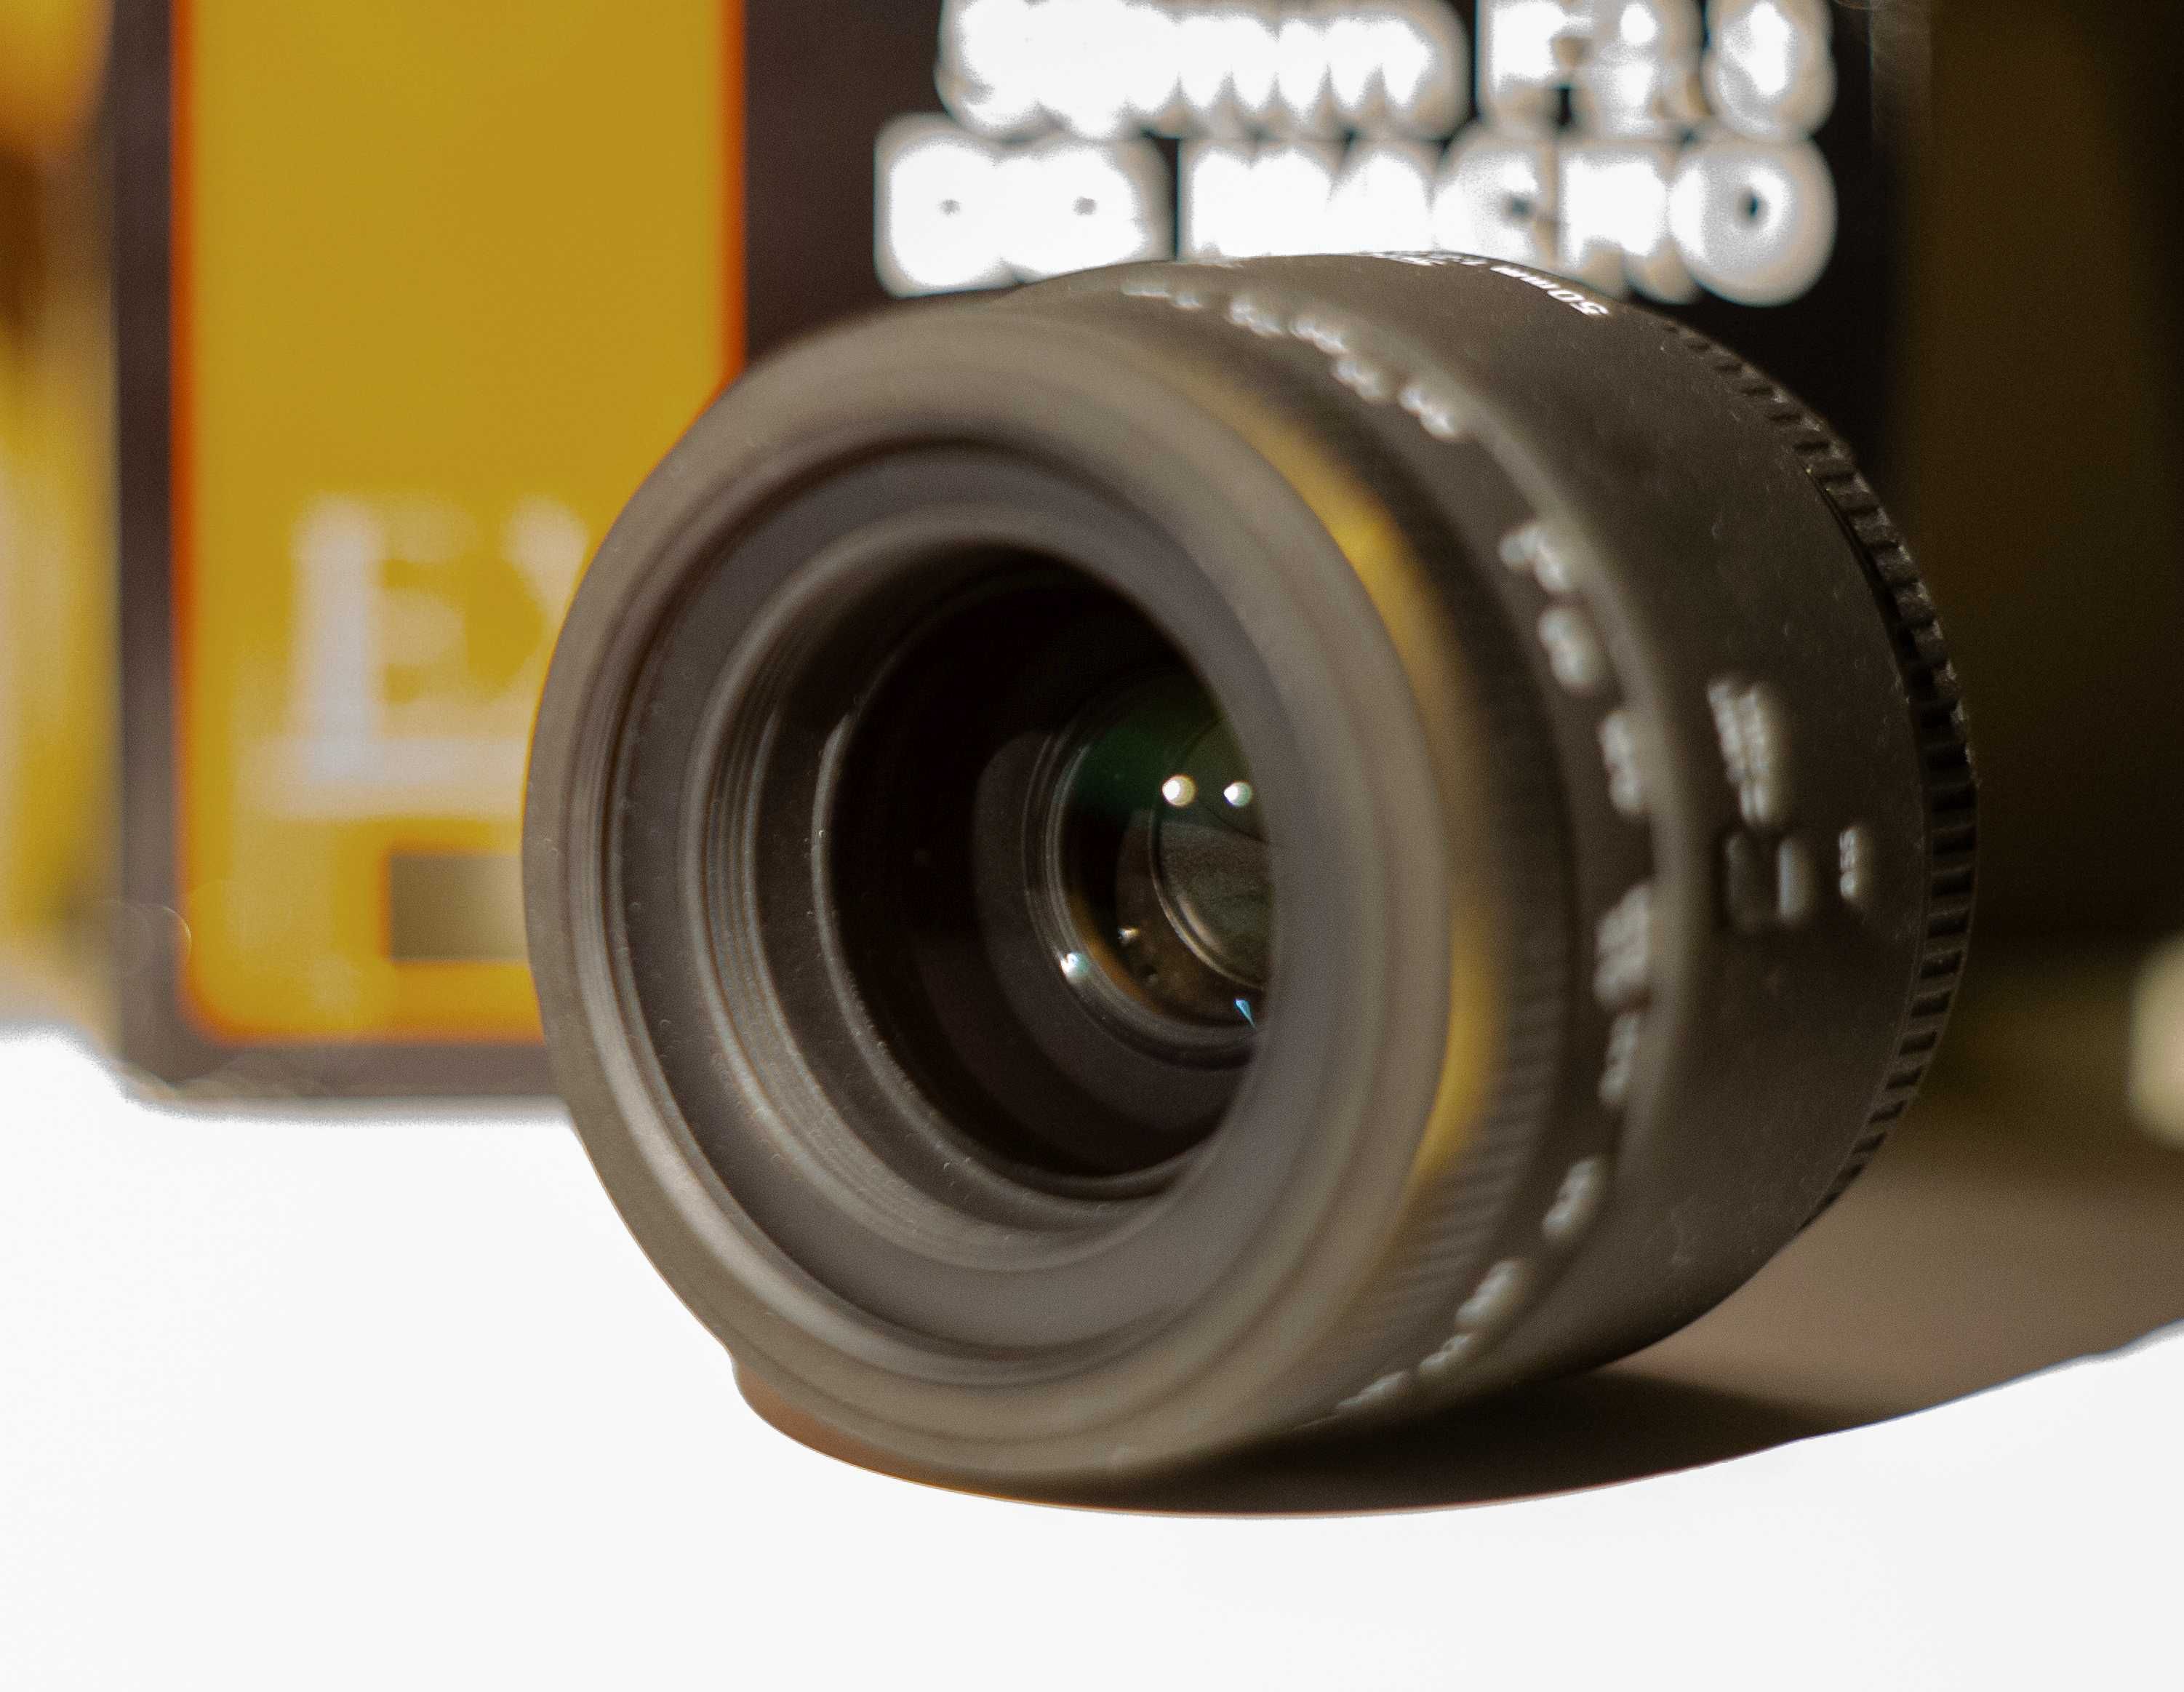 Obiectiv Sigma 50mm f/2.8 EX DG Macro 1:1 compatibil Nikon .